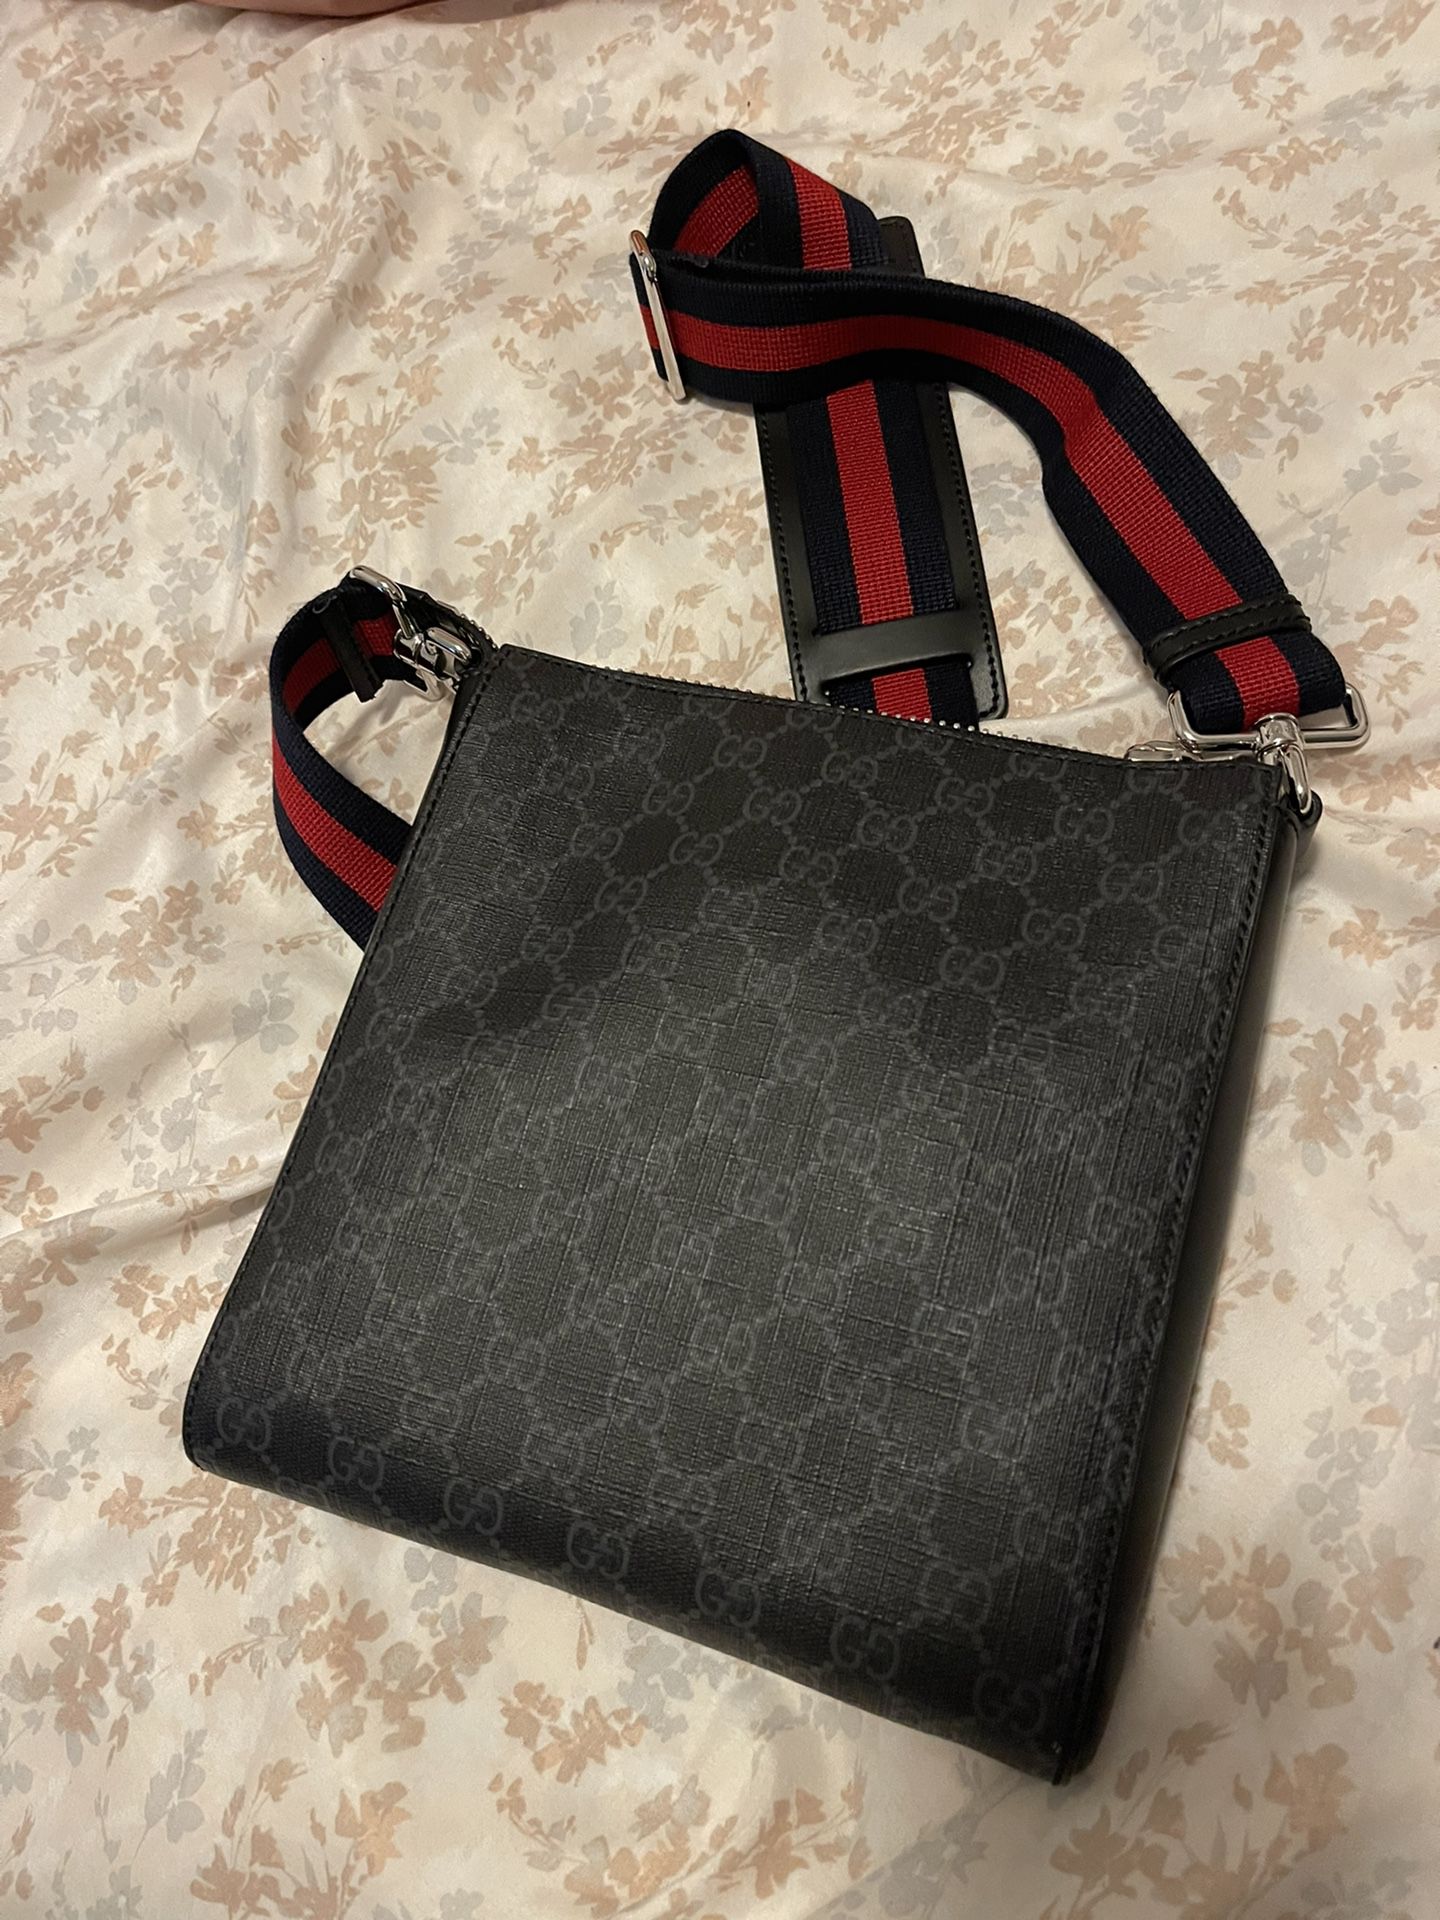 Gucci GG Black small messenger bag